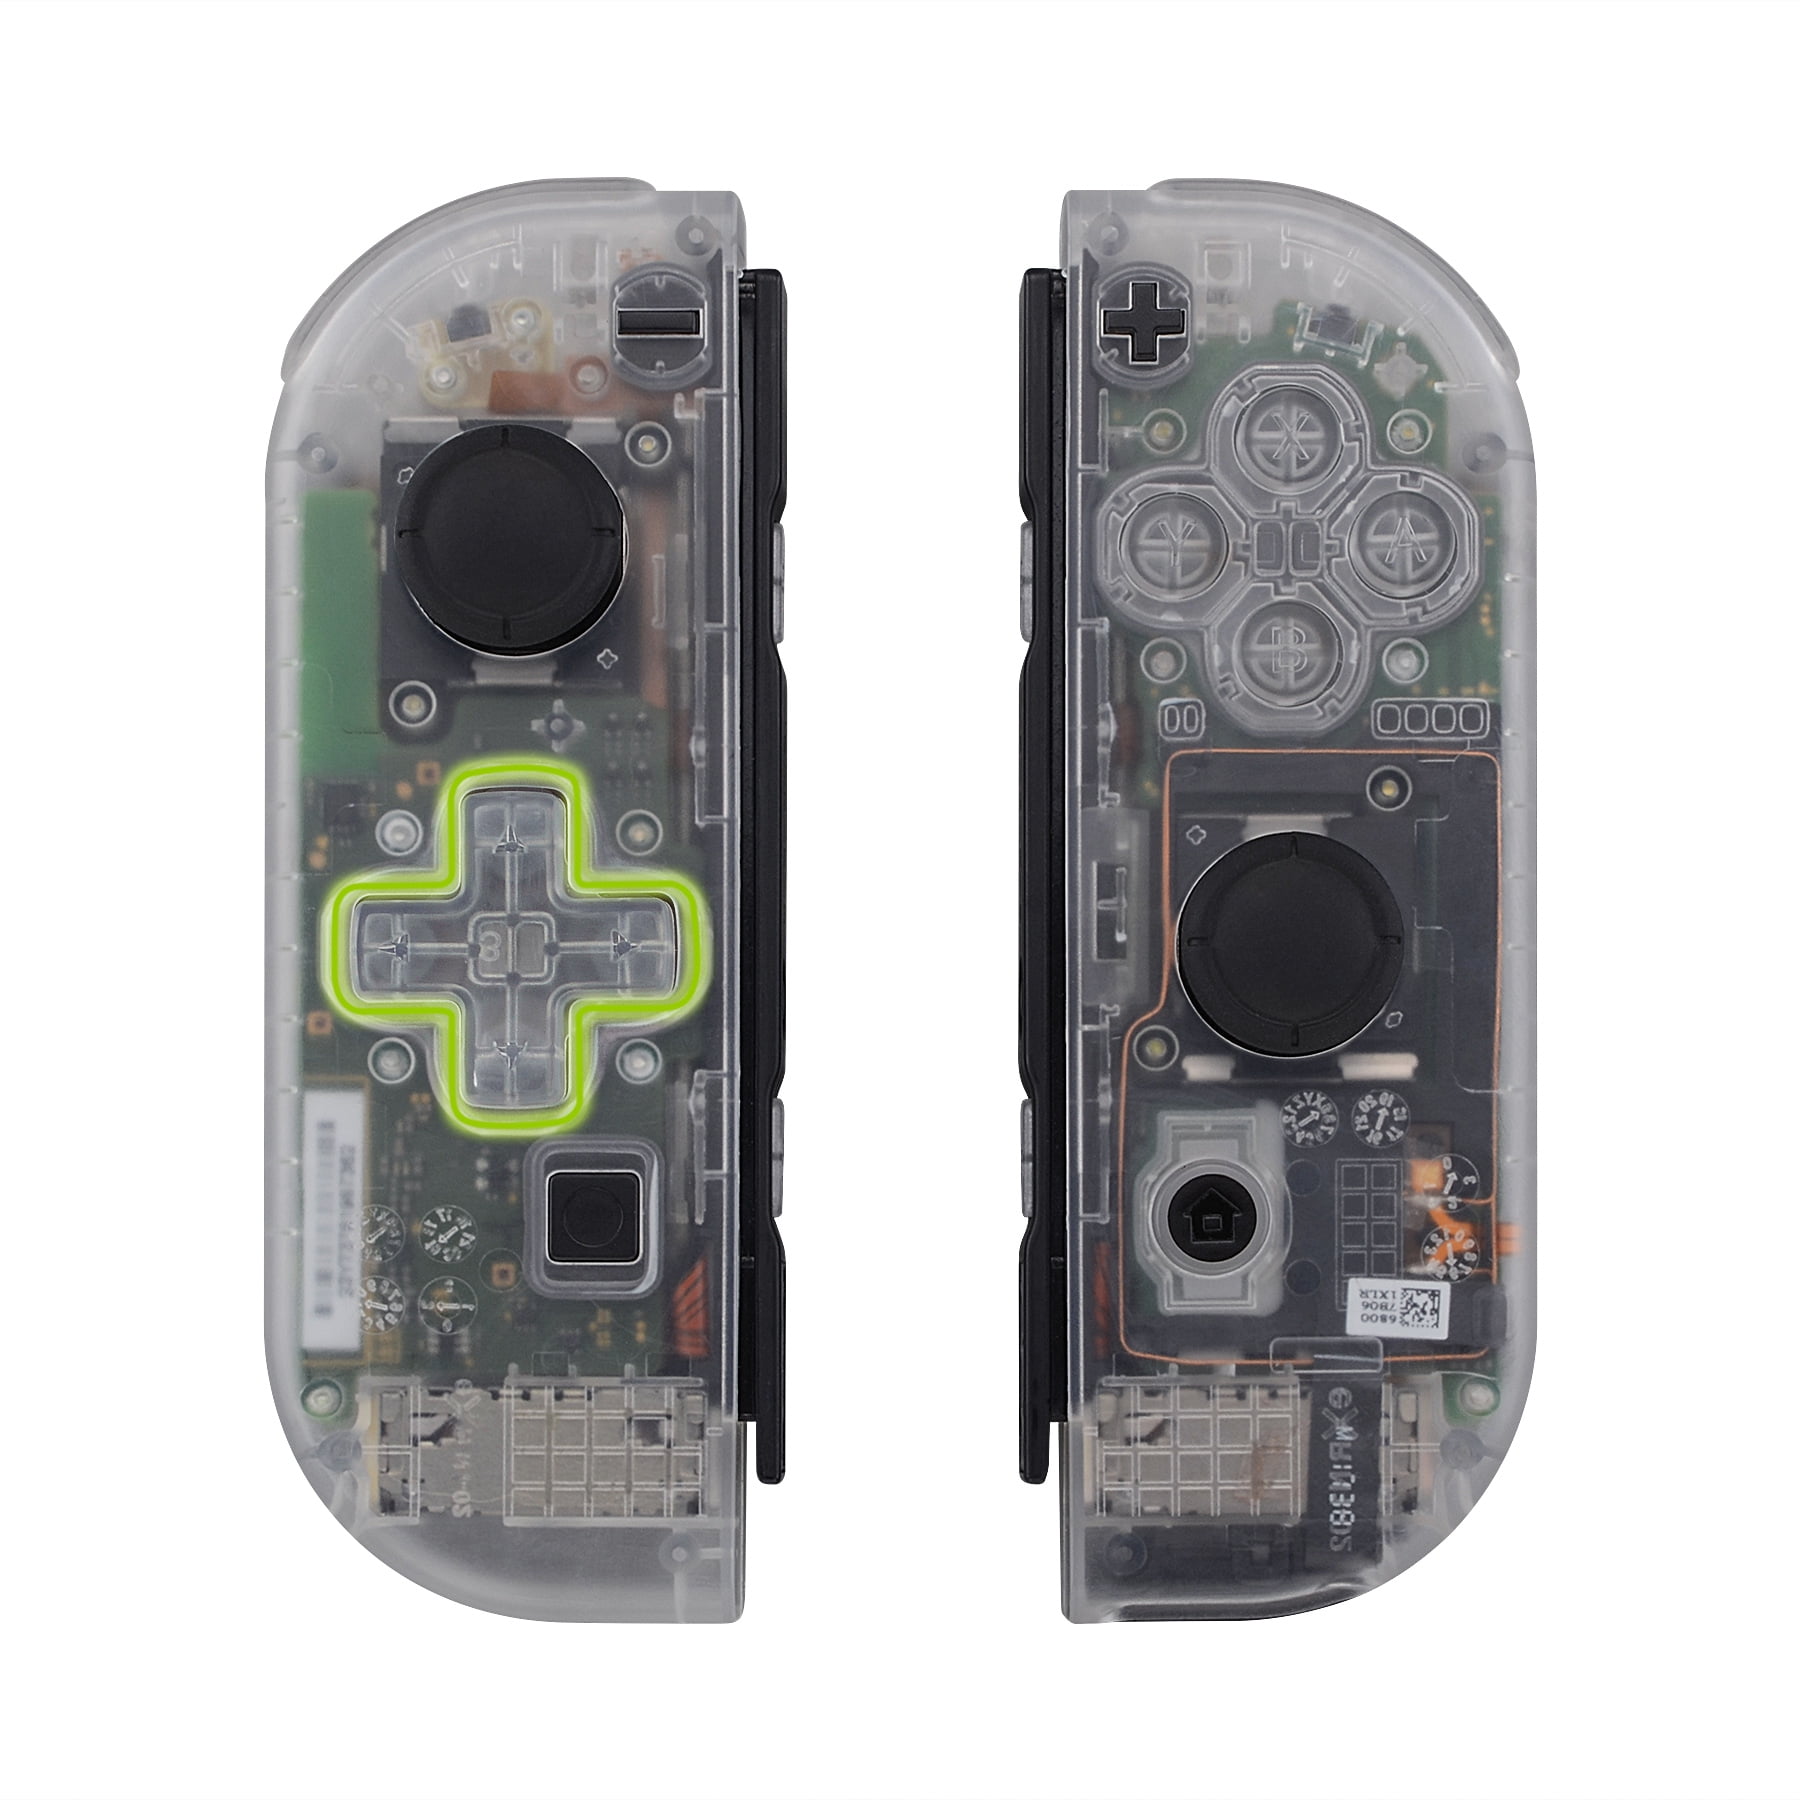 TechInsights Teardown: Nintendo Switch OLED handheld game console